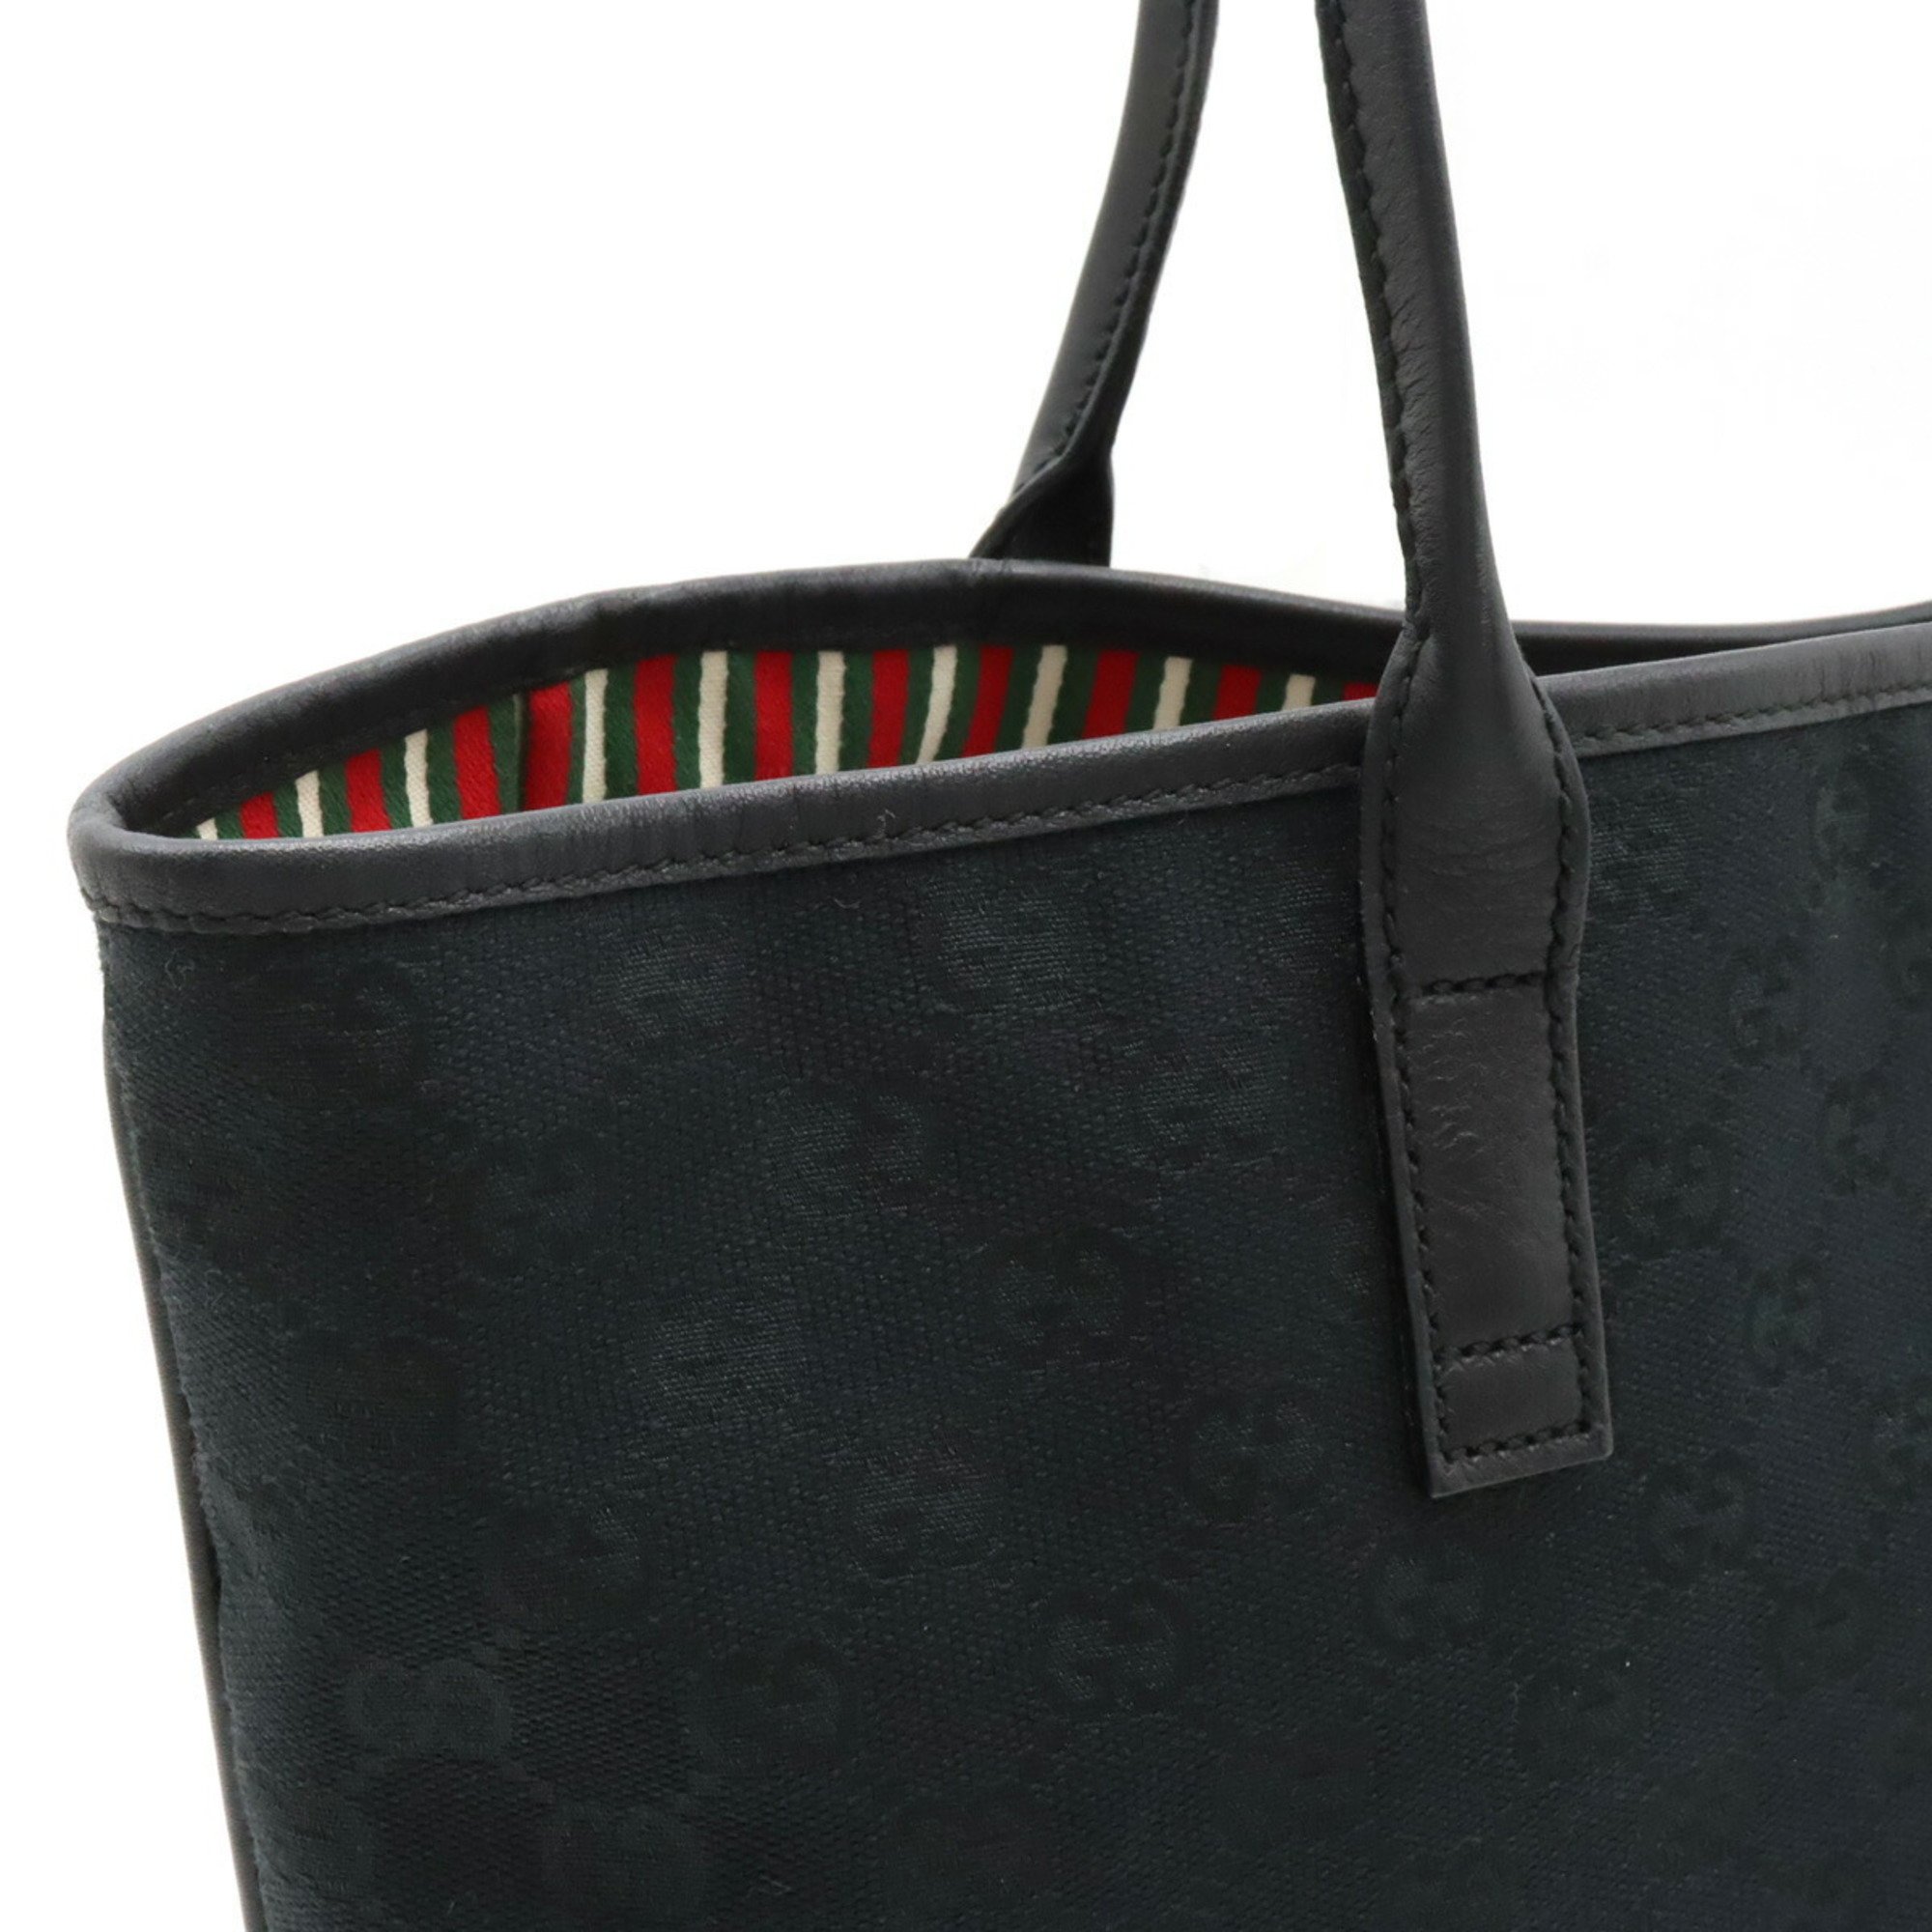 GUCCI GG canvas pattern tote bag shoulder leather black 169946